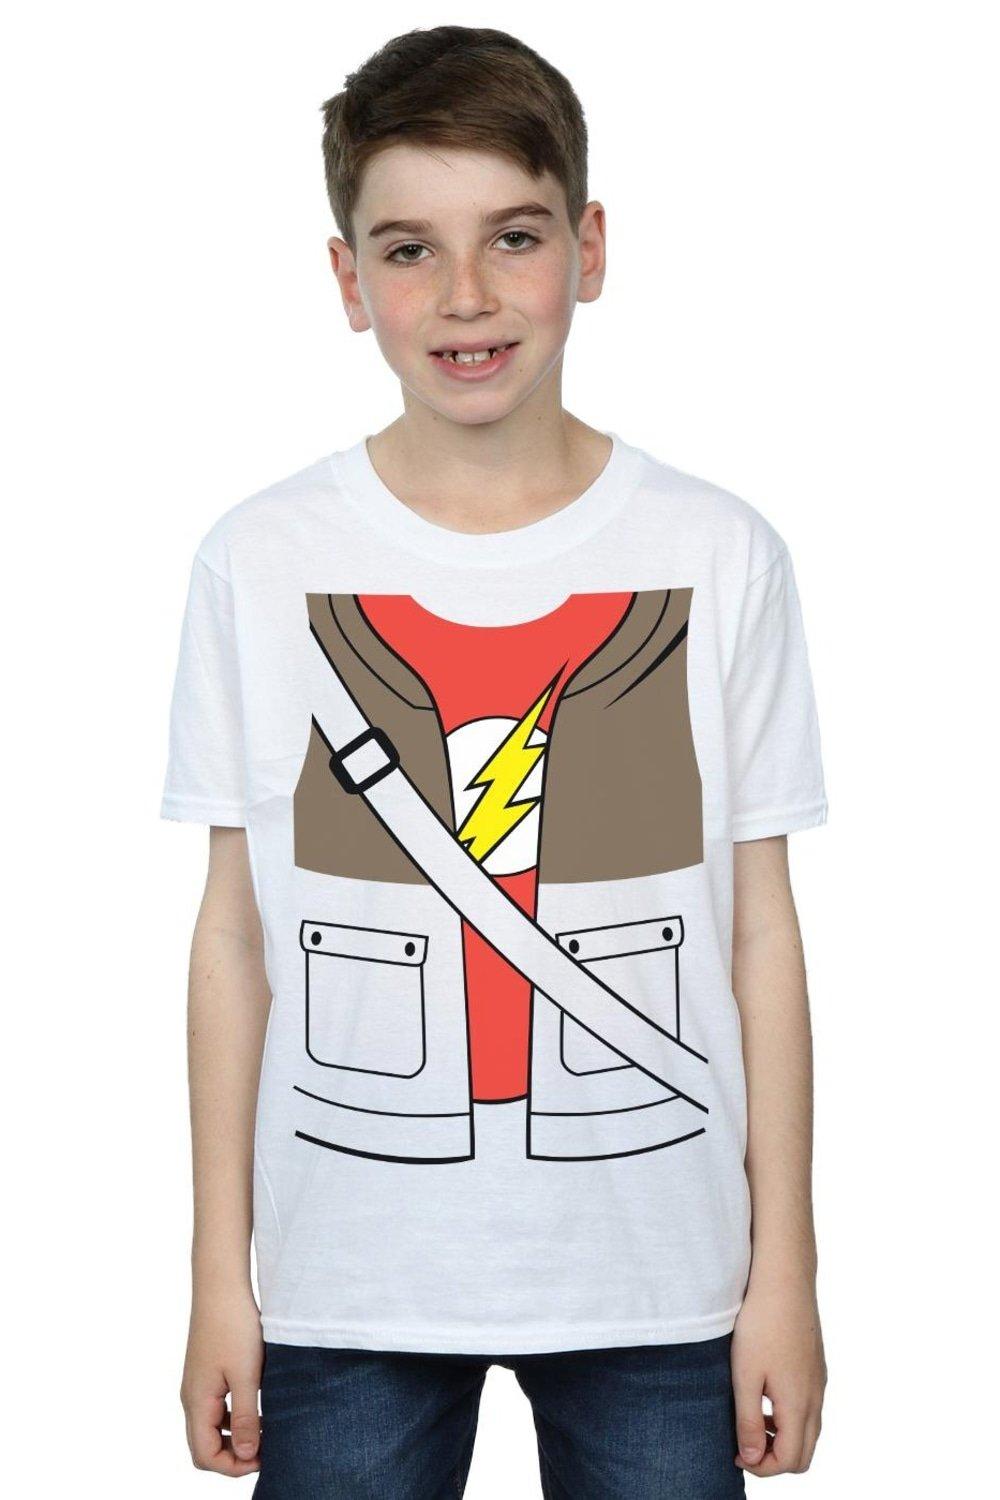 Sheldon Cooper Costume T-Shirt